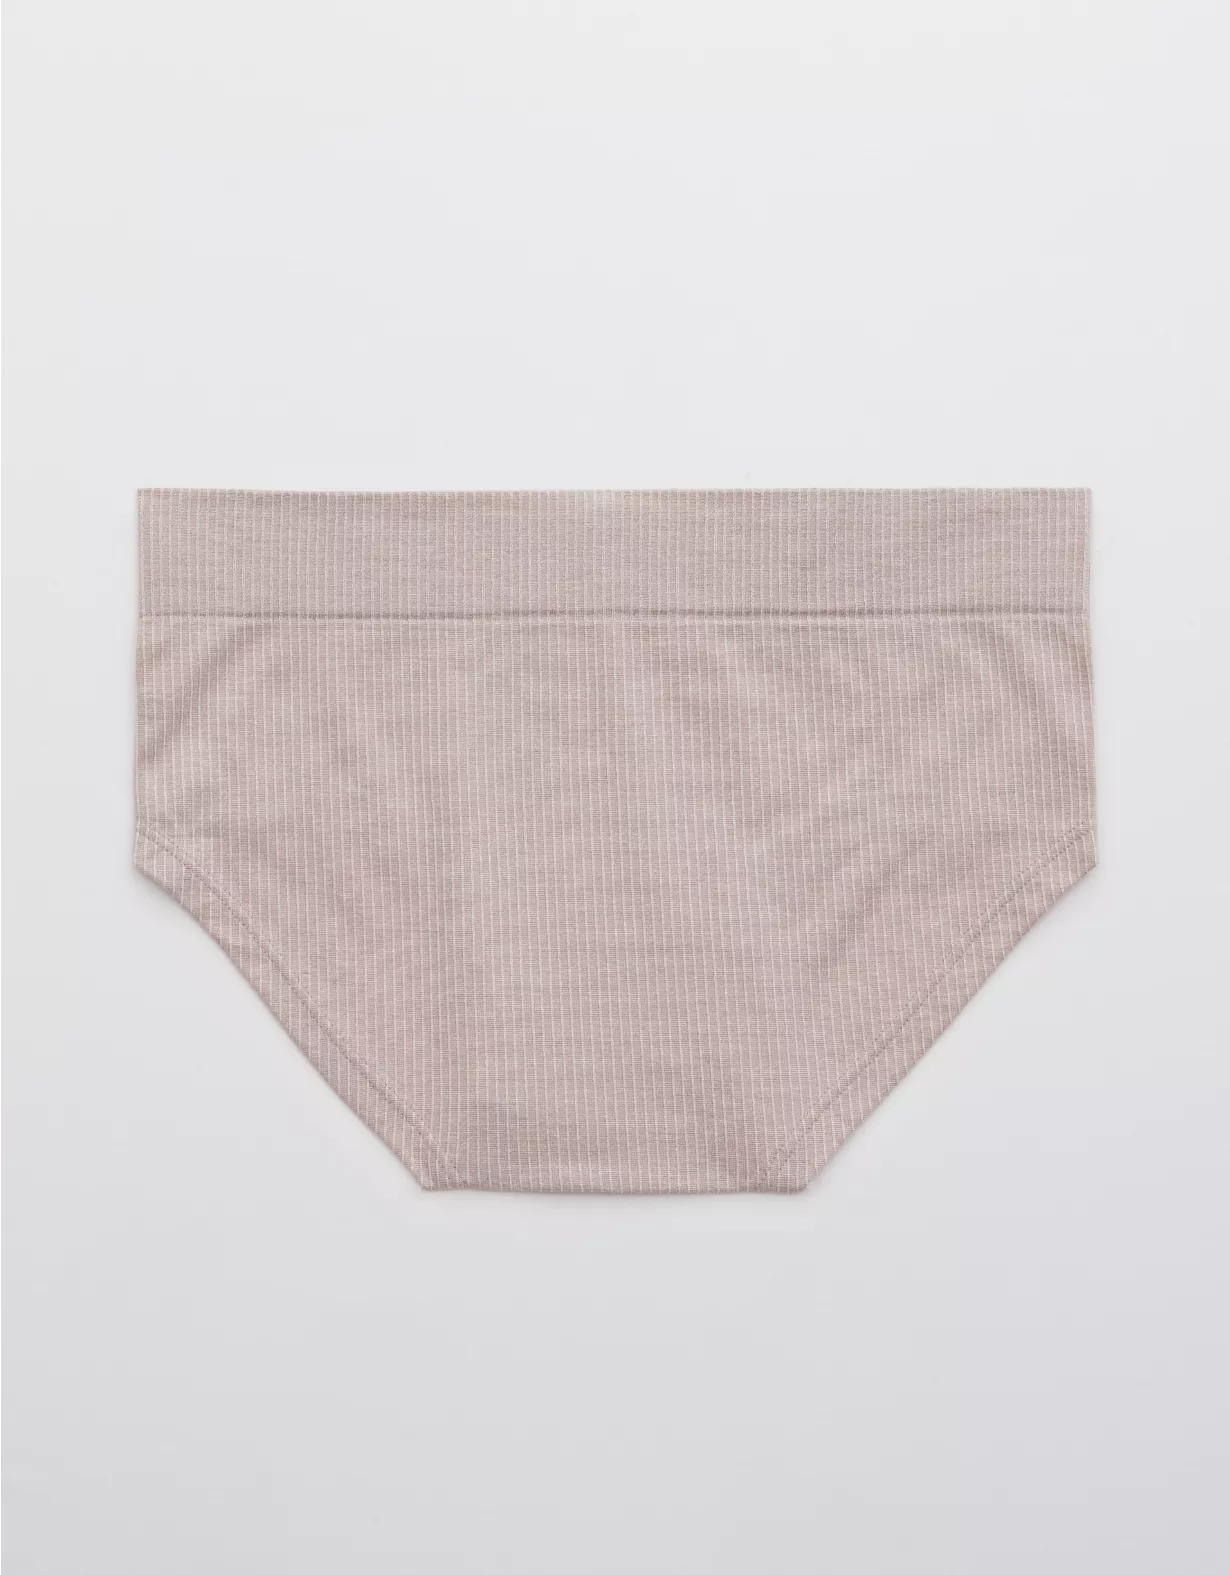 Aerie Ribbed Seamless Boybrief Underwear